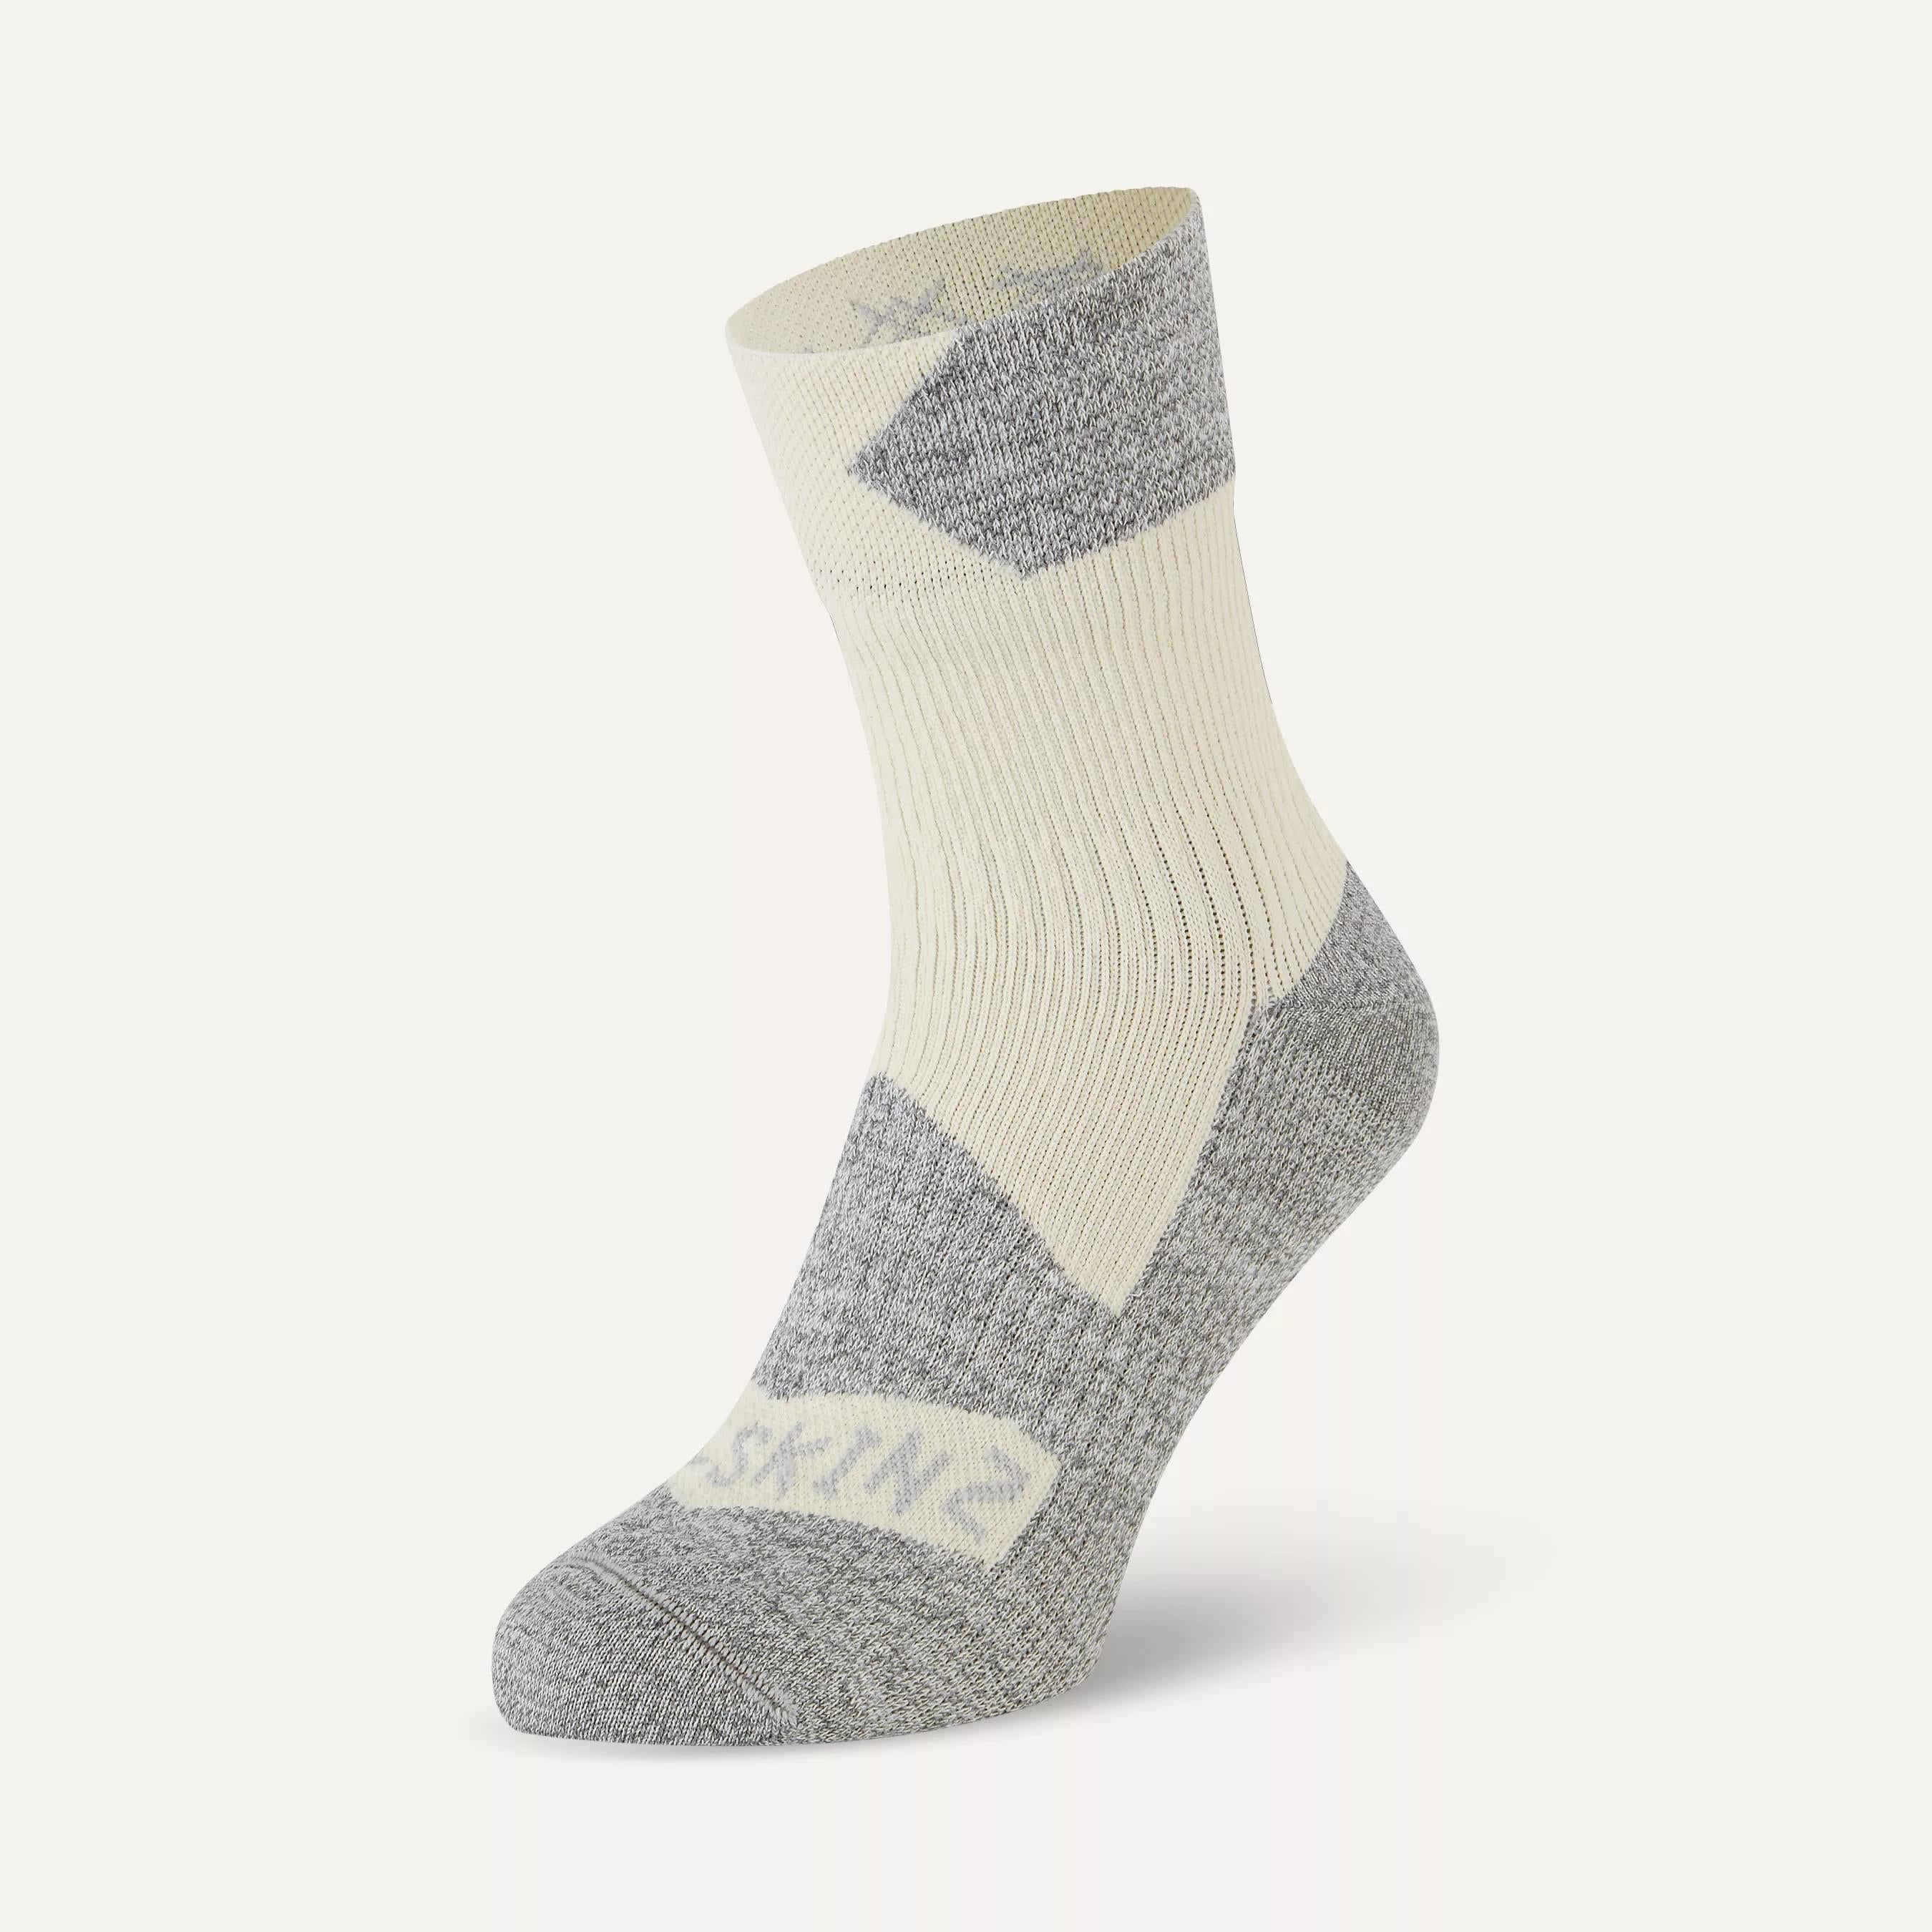 White Maestro Ankle Grip Socks Medium (6-8 US)